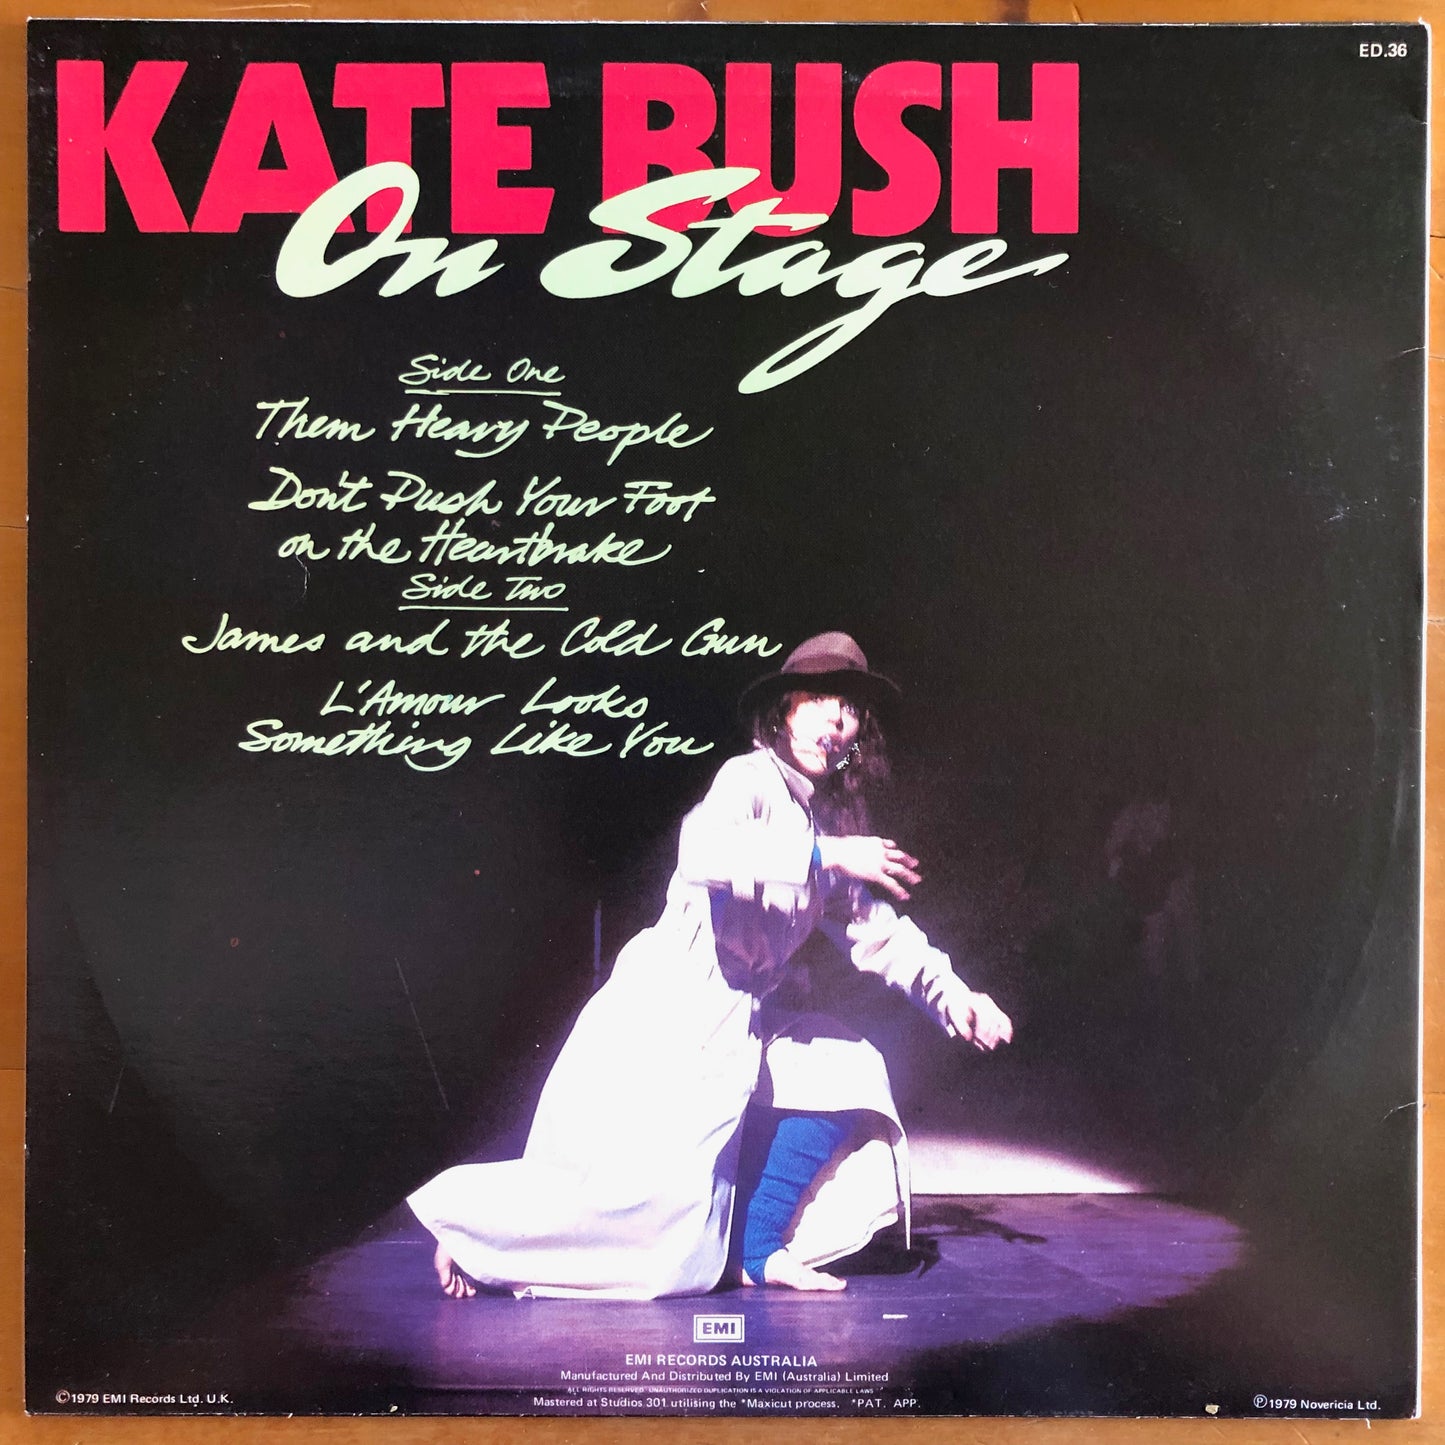 Kate Bush - On Stage (12" EP)